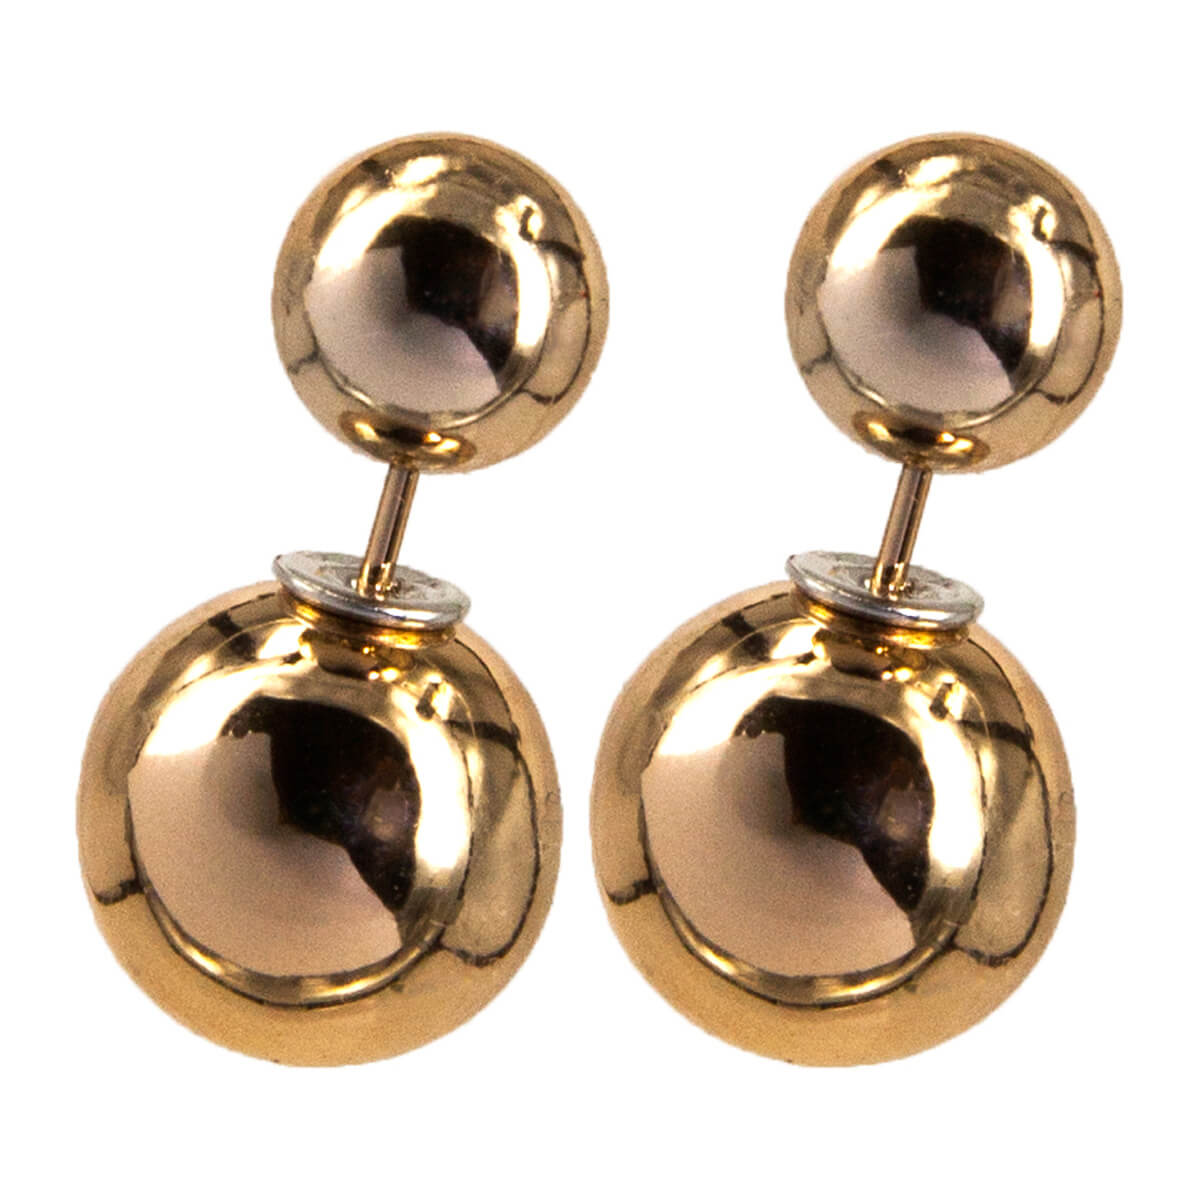 Double ball earrings